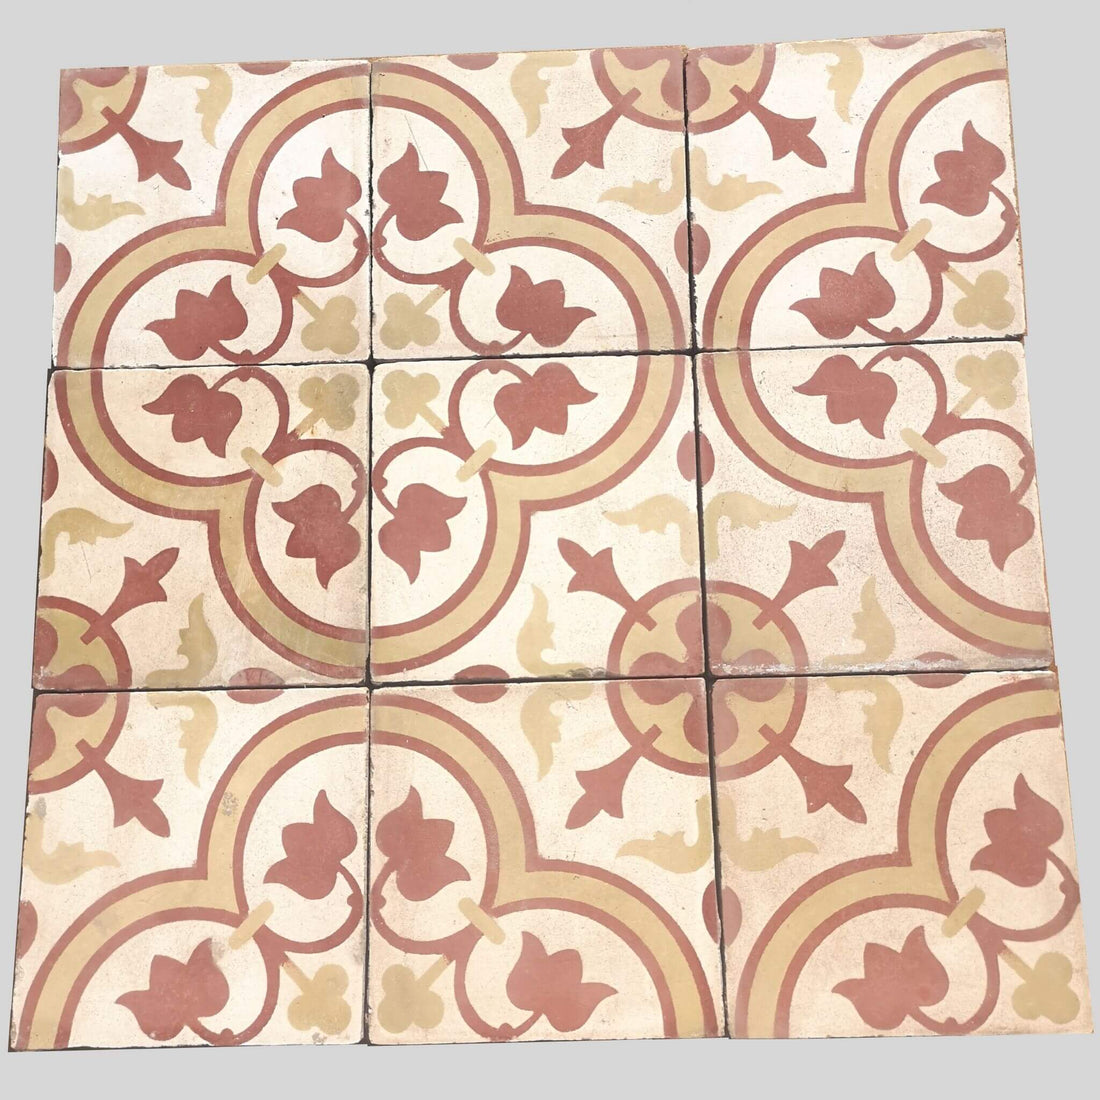 Antique European floor tiles with clover decoartion